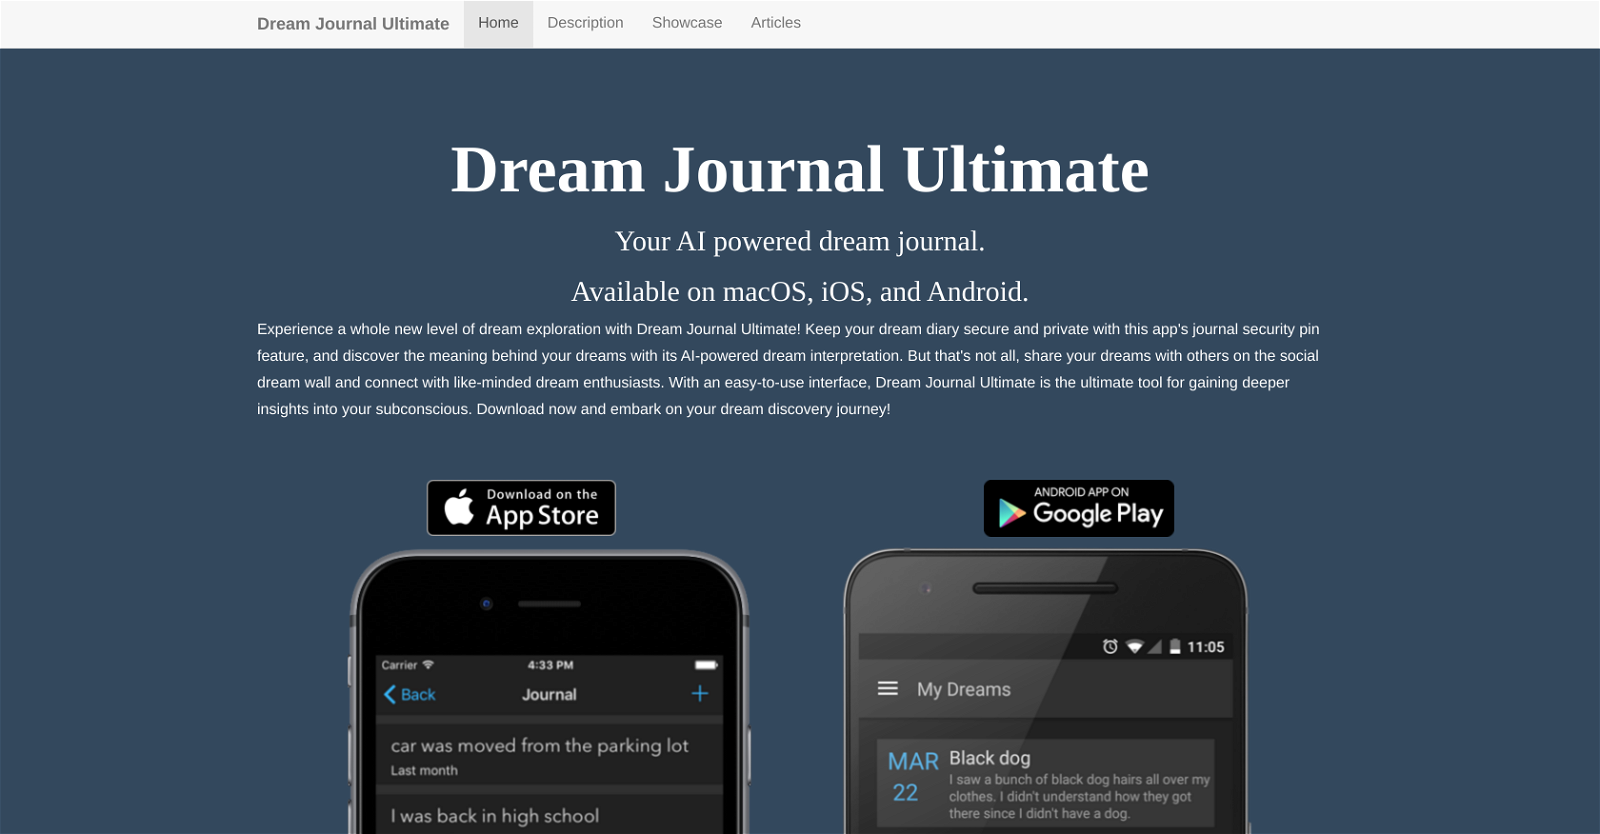 Dream Journal website